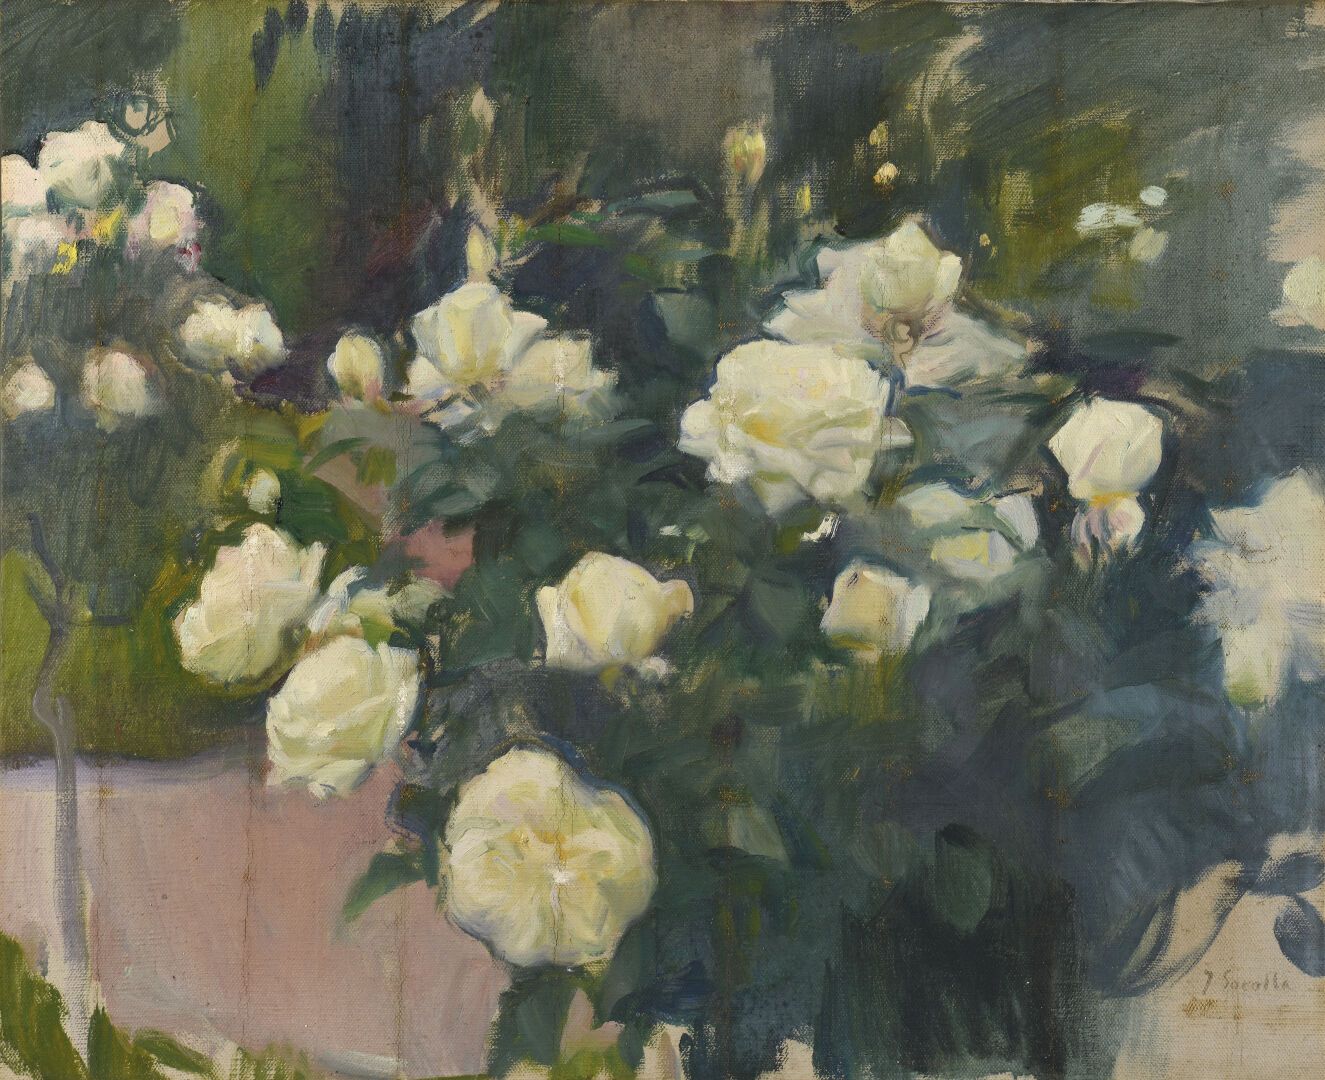 Null Joaquin SOROLLA Y BASTIDA (1863-1923)
Die weißen Rosen, 1916-1919
Öl auf Le&hellip;